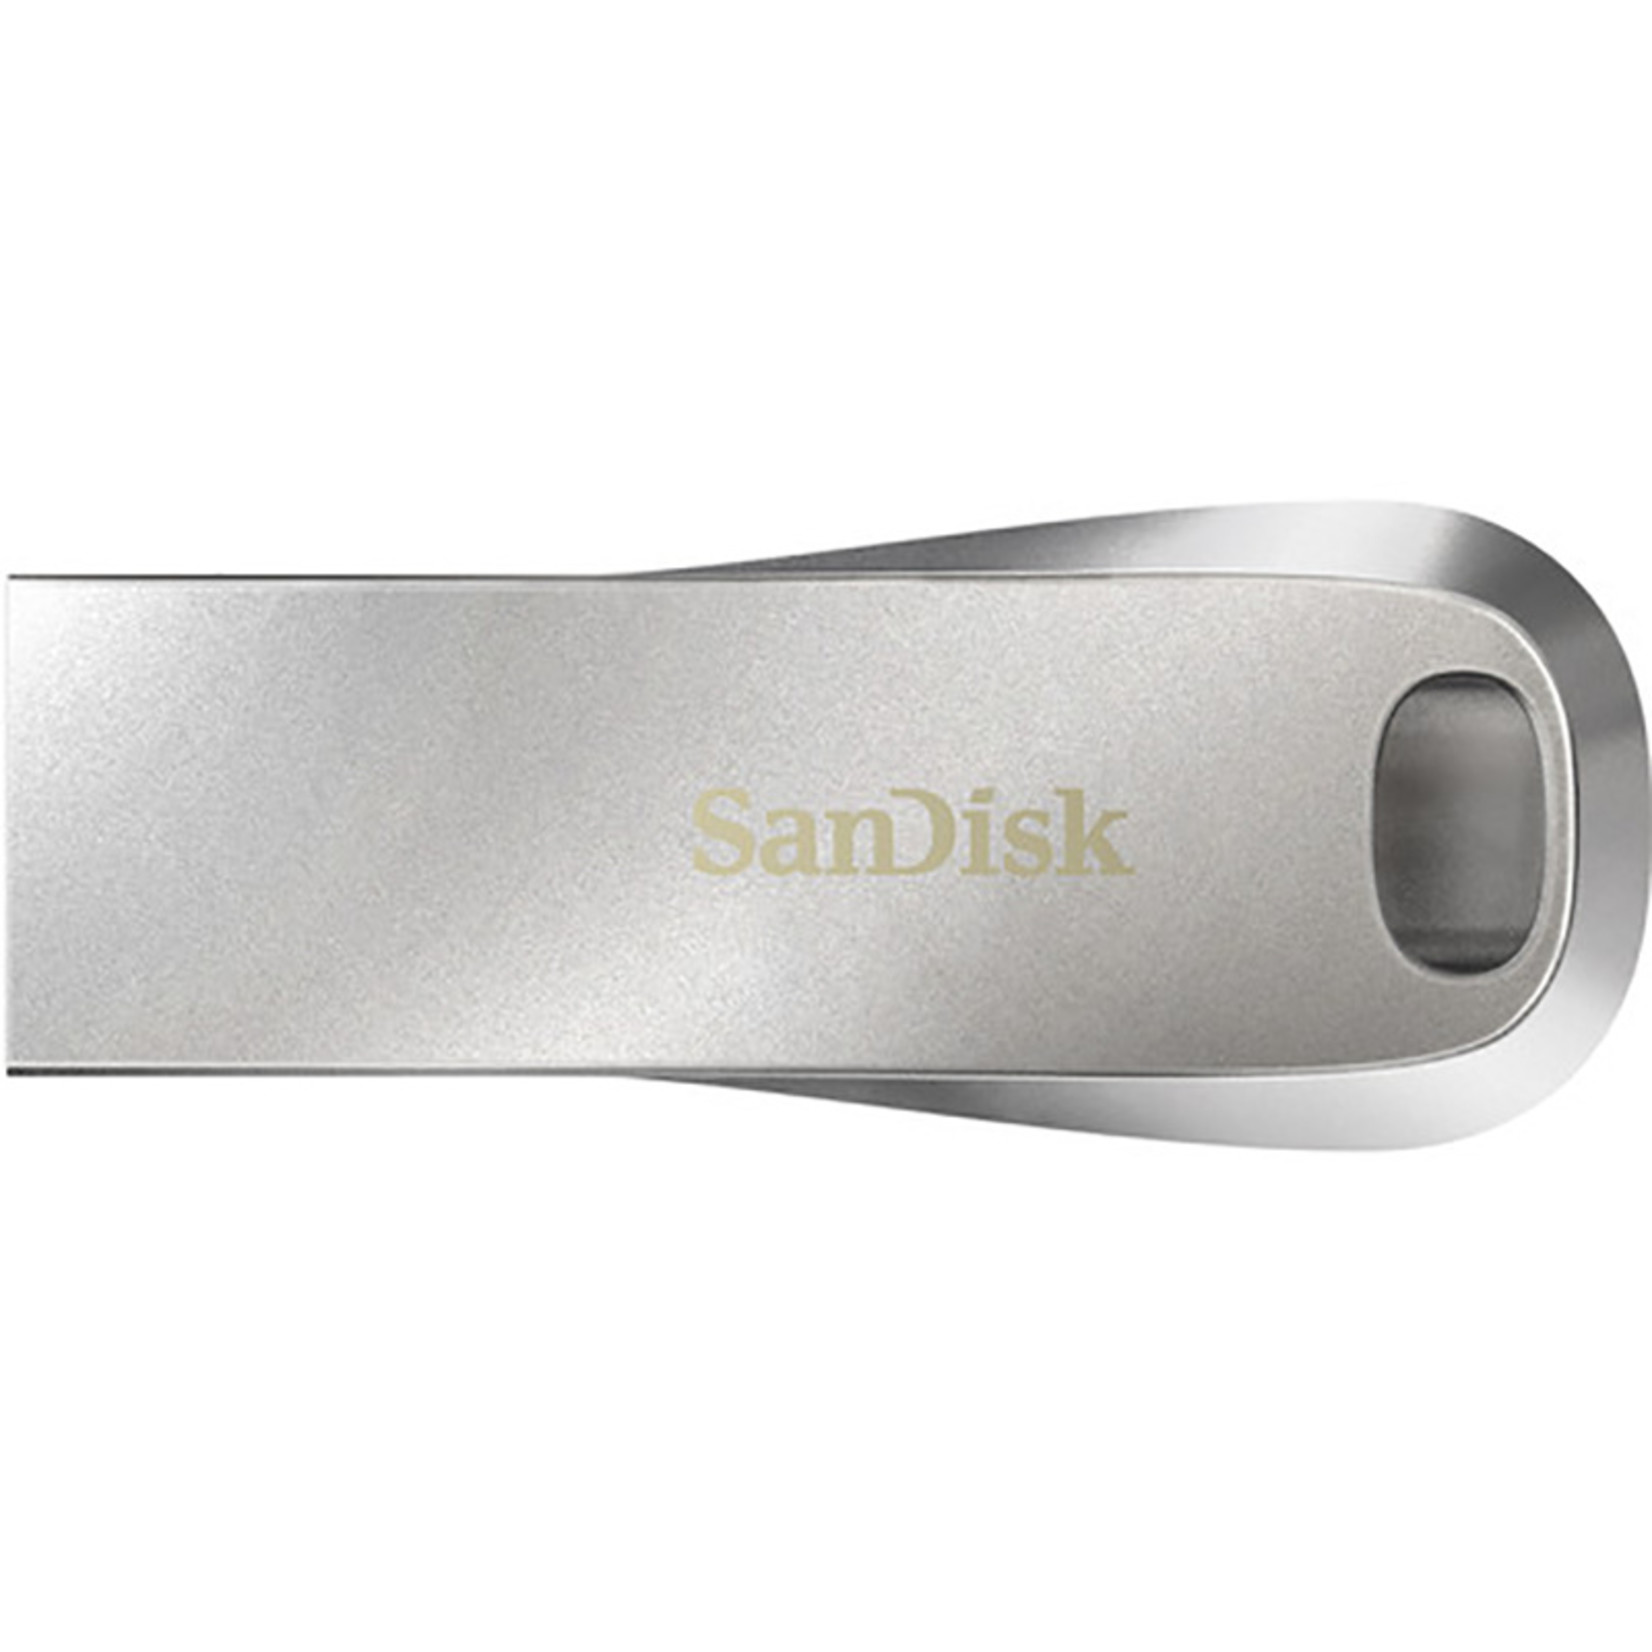 SanDisk SanDisk Ultra, 128GB, USB 3.1, Type A, Metal